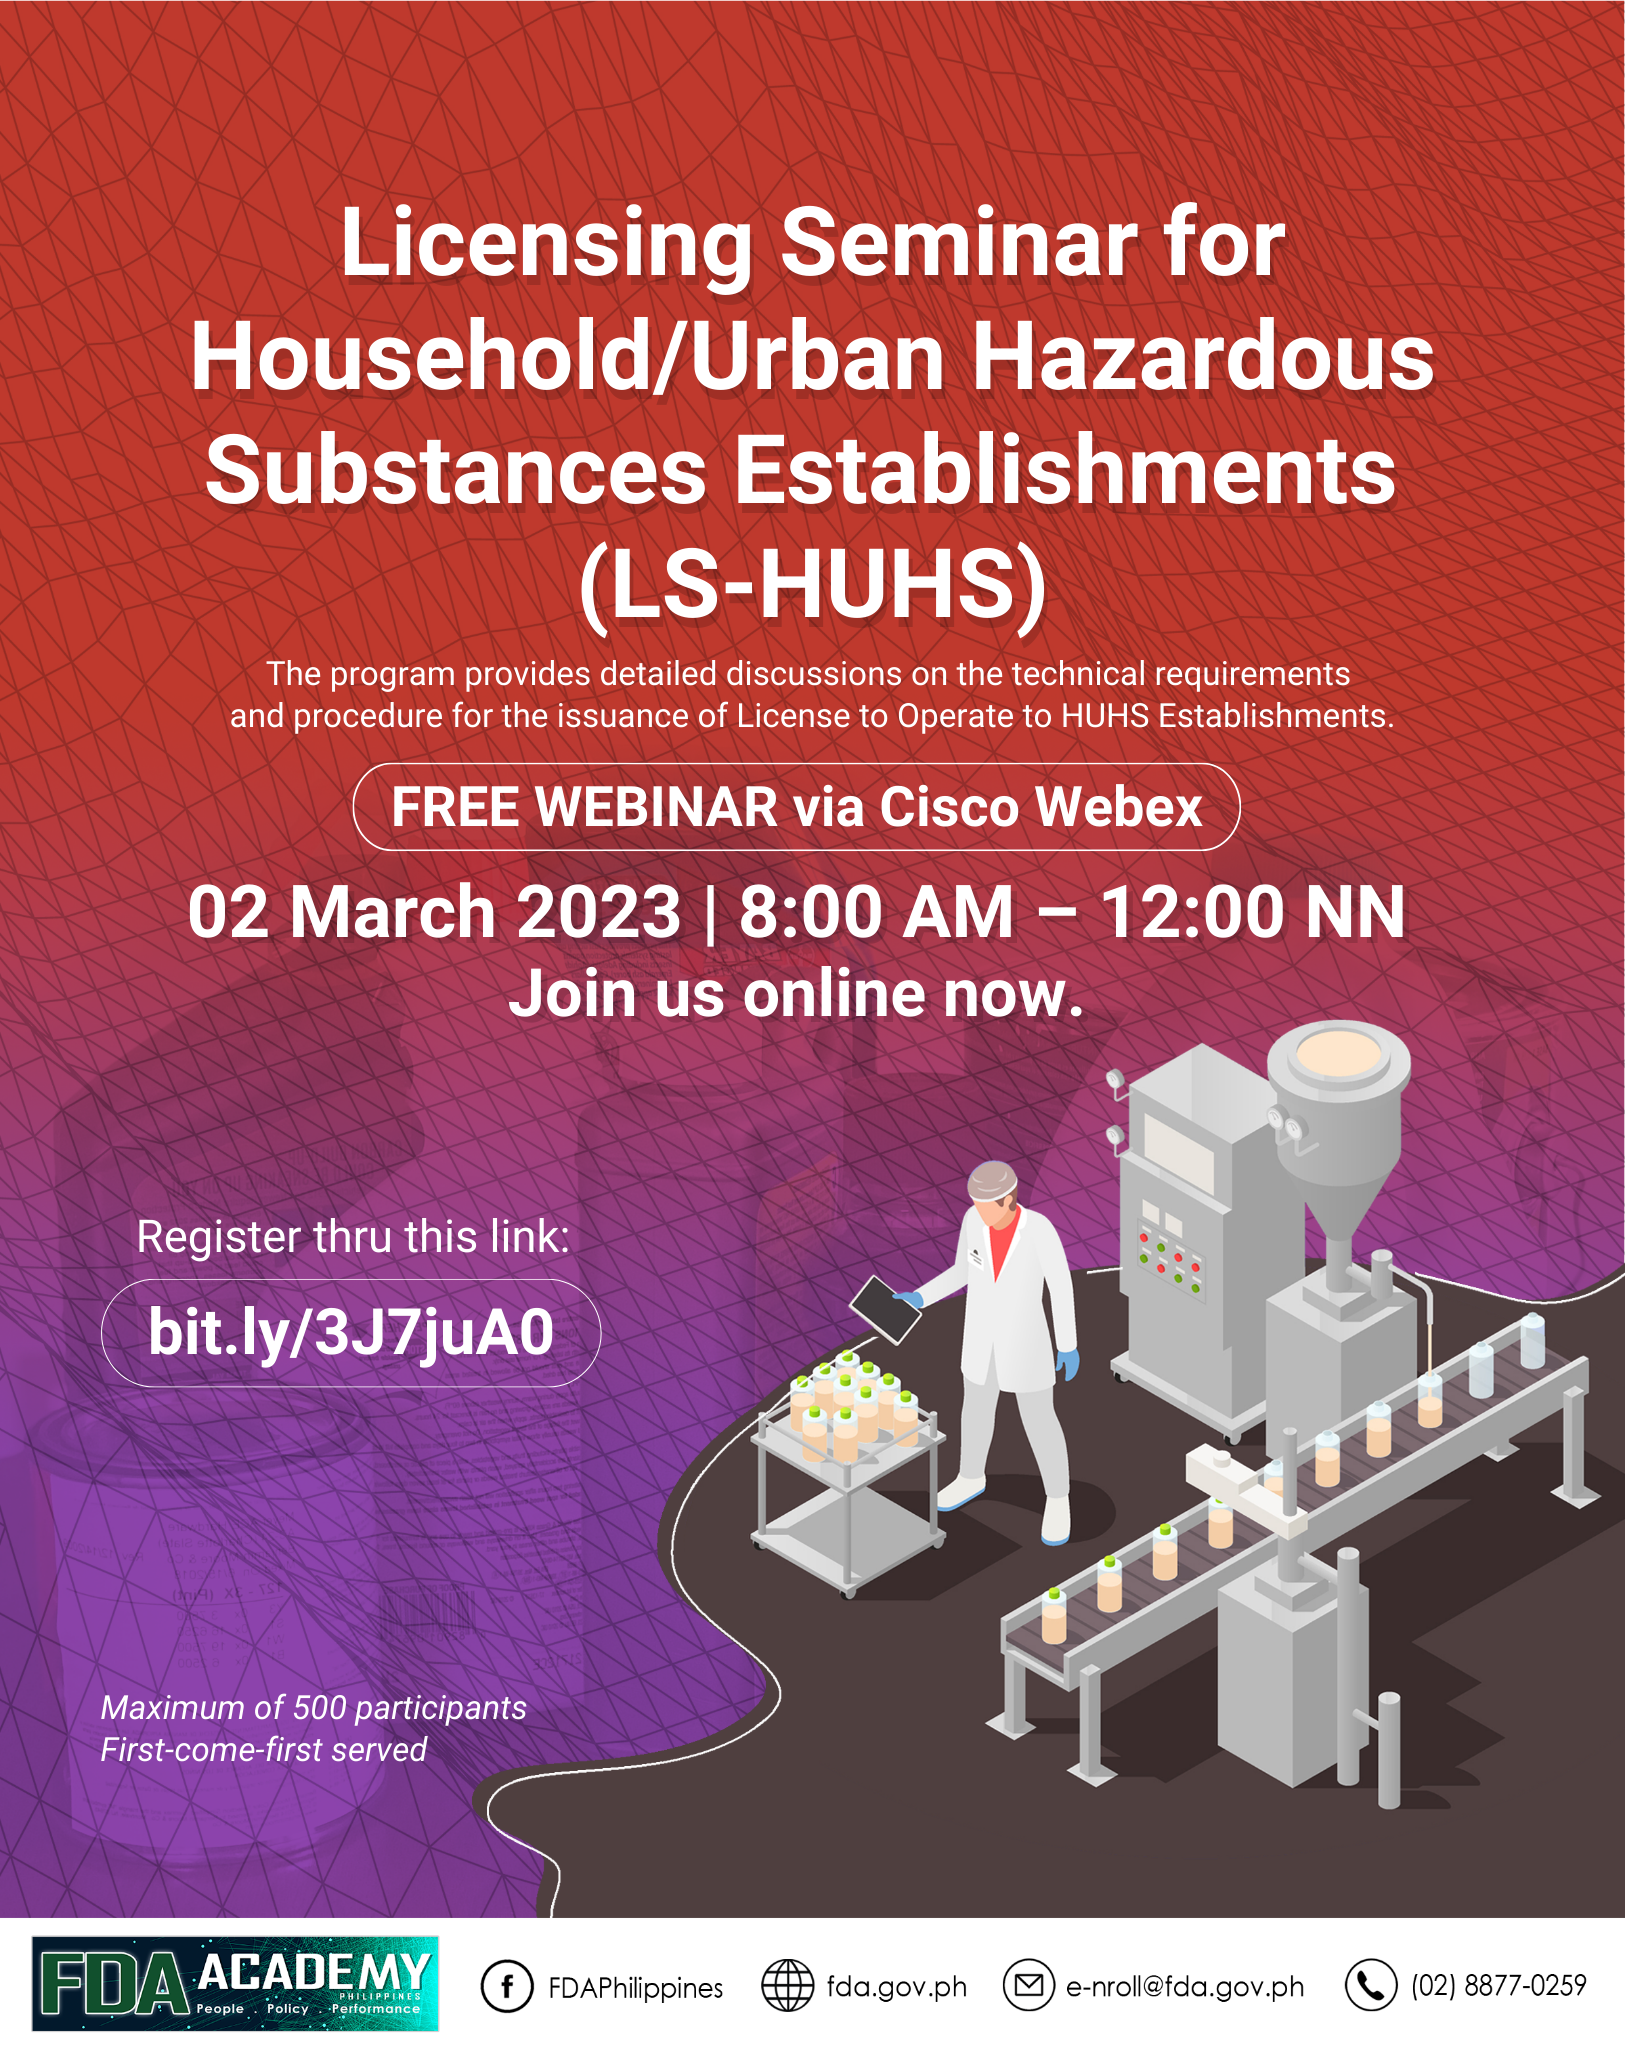 Licensing Seminar for Household/Urban Hazardous Substances Establishments (LS-HUHS)